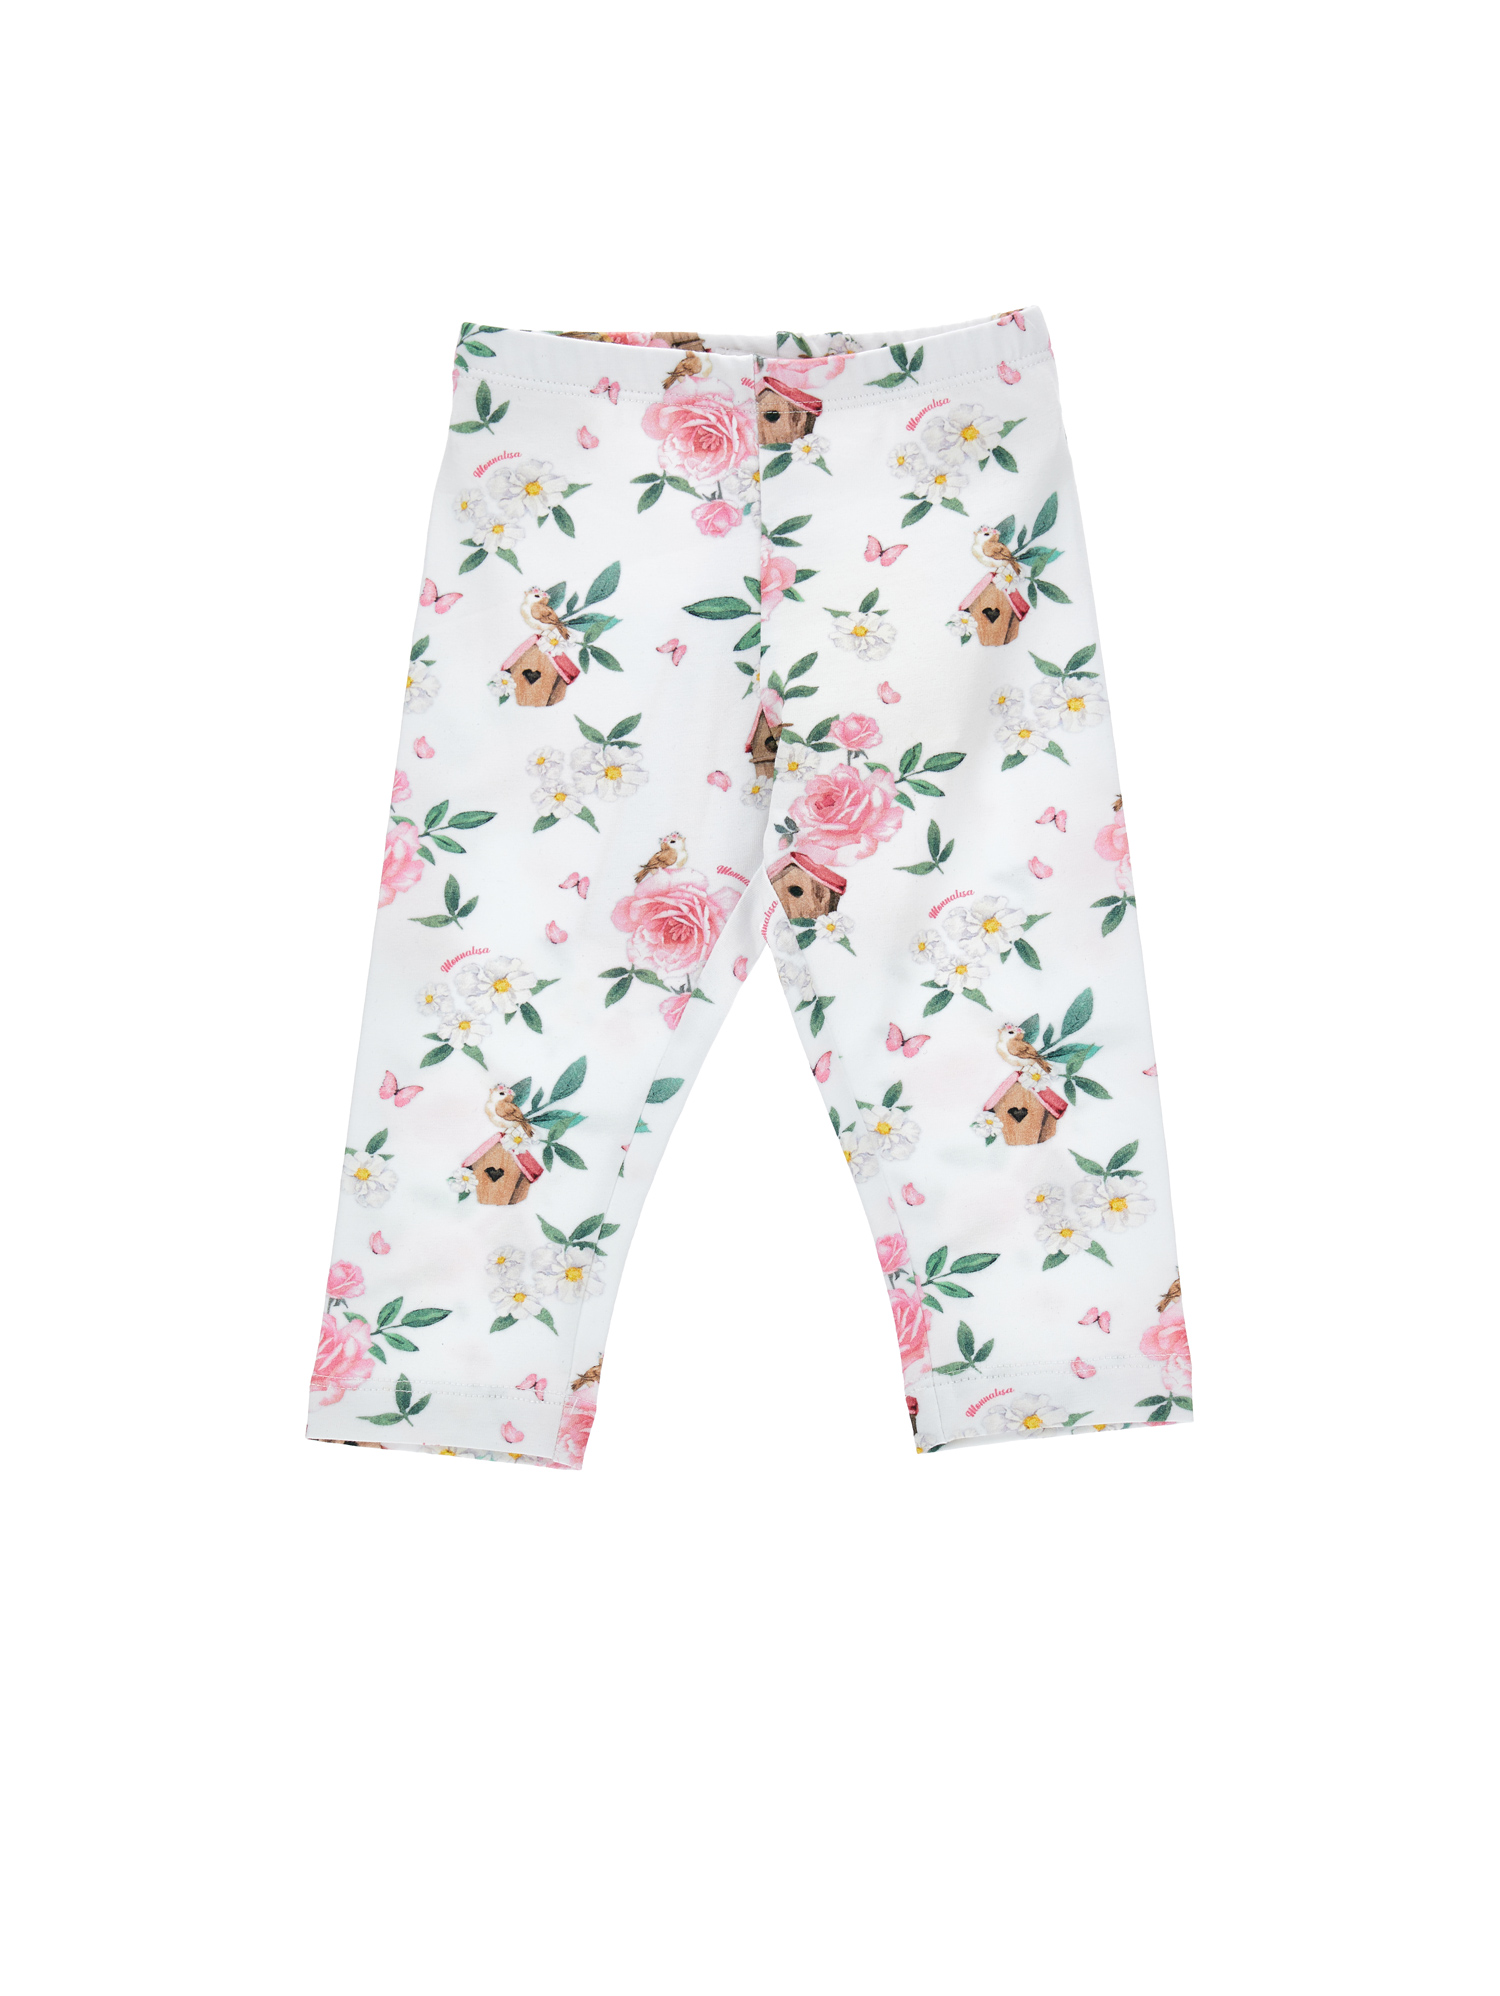 Floral print cotton leggings girl